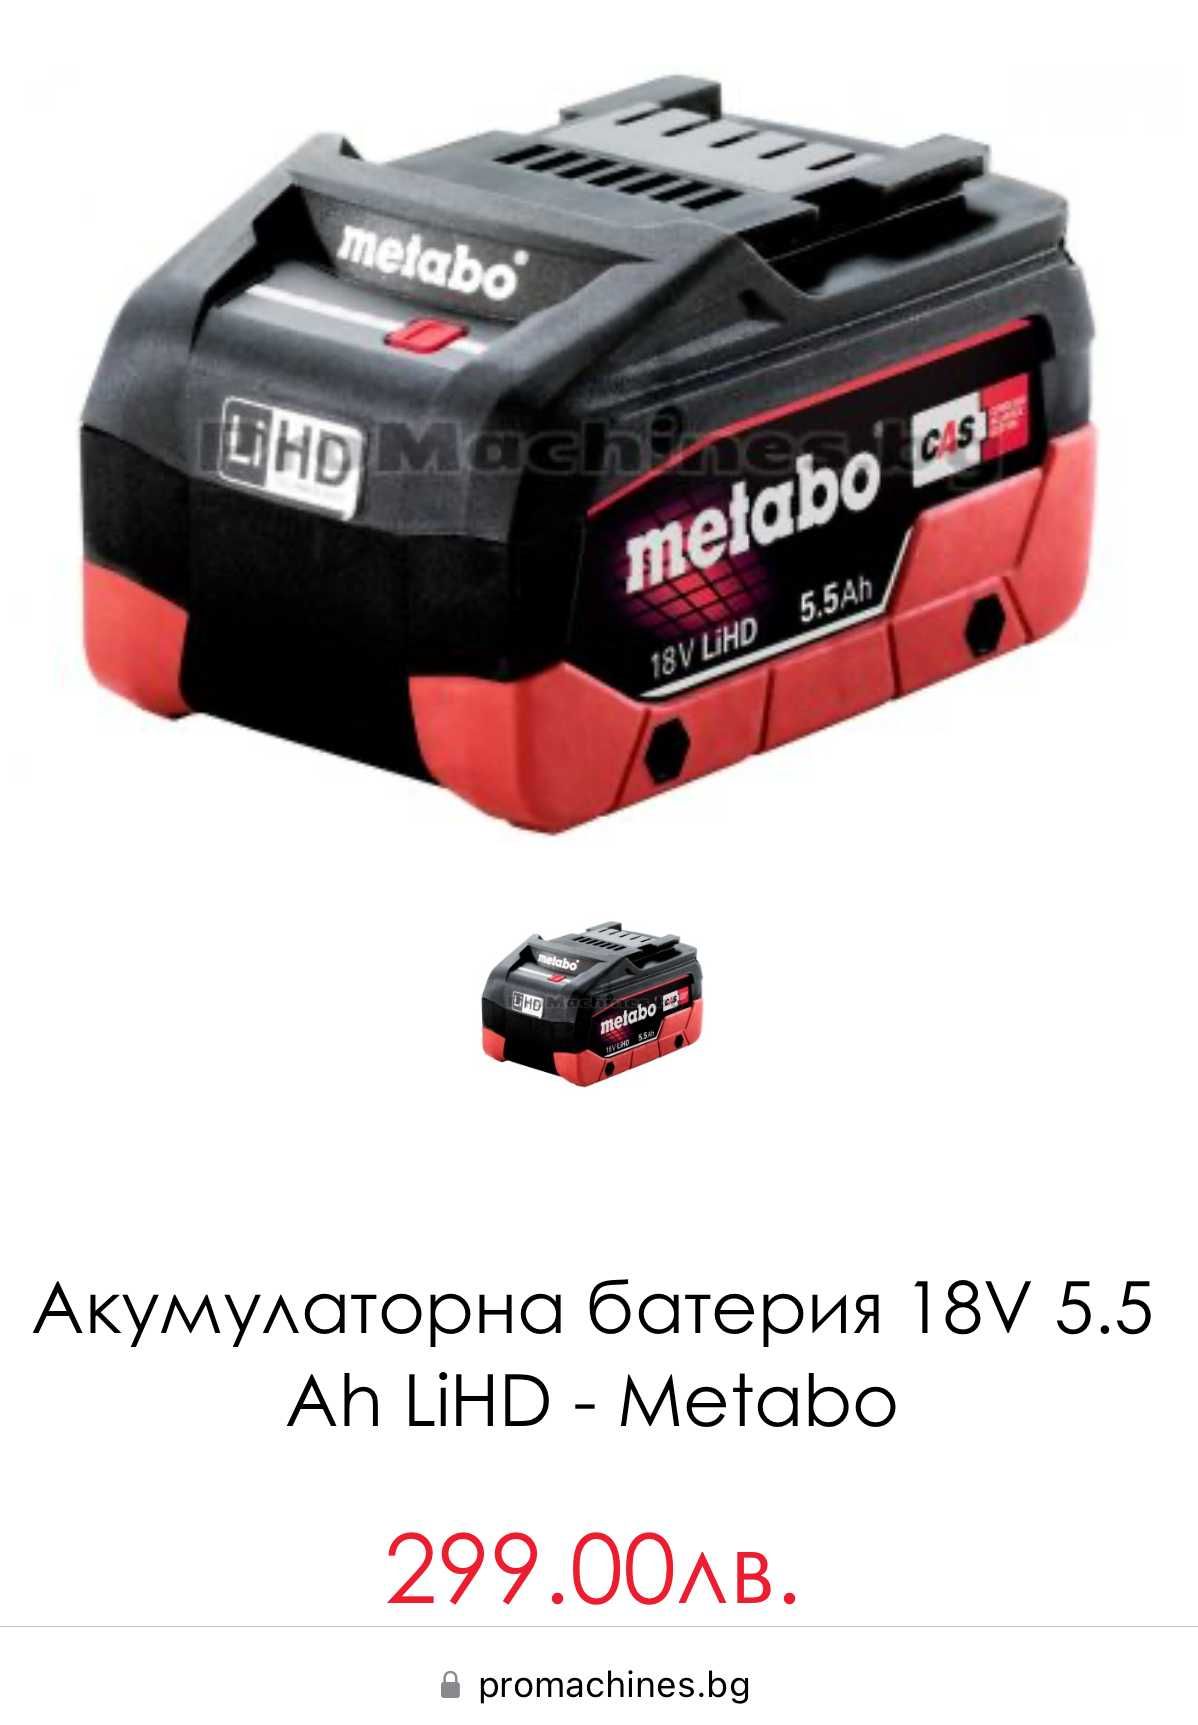 Metabo 18V 5.5Ah Li-HD - Акумулаторни батерии 3 броя